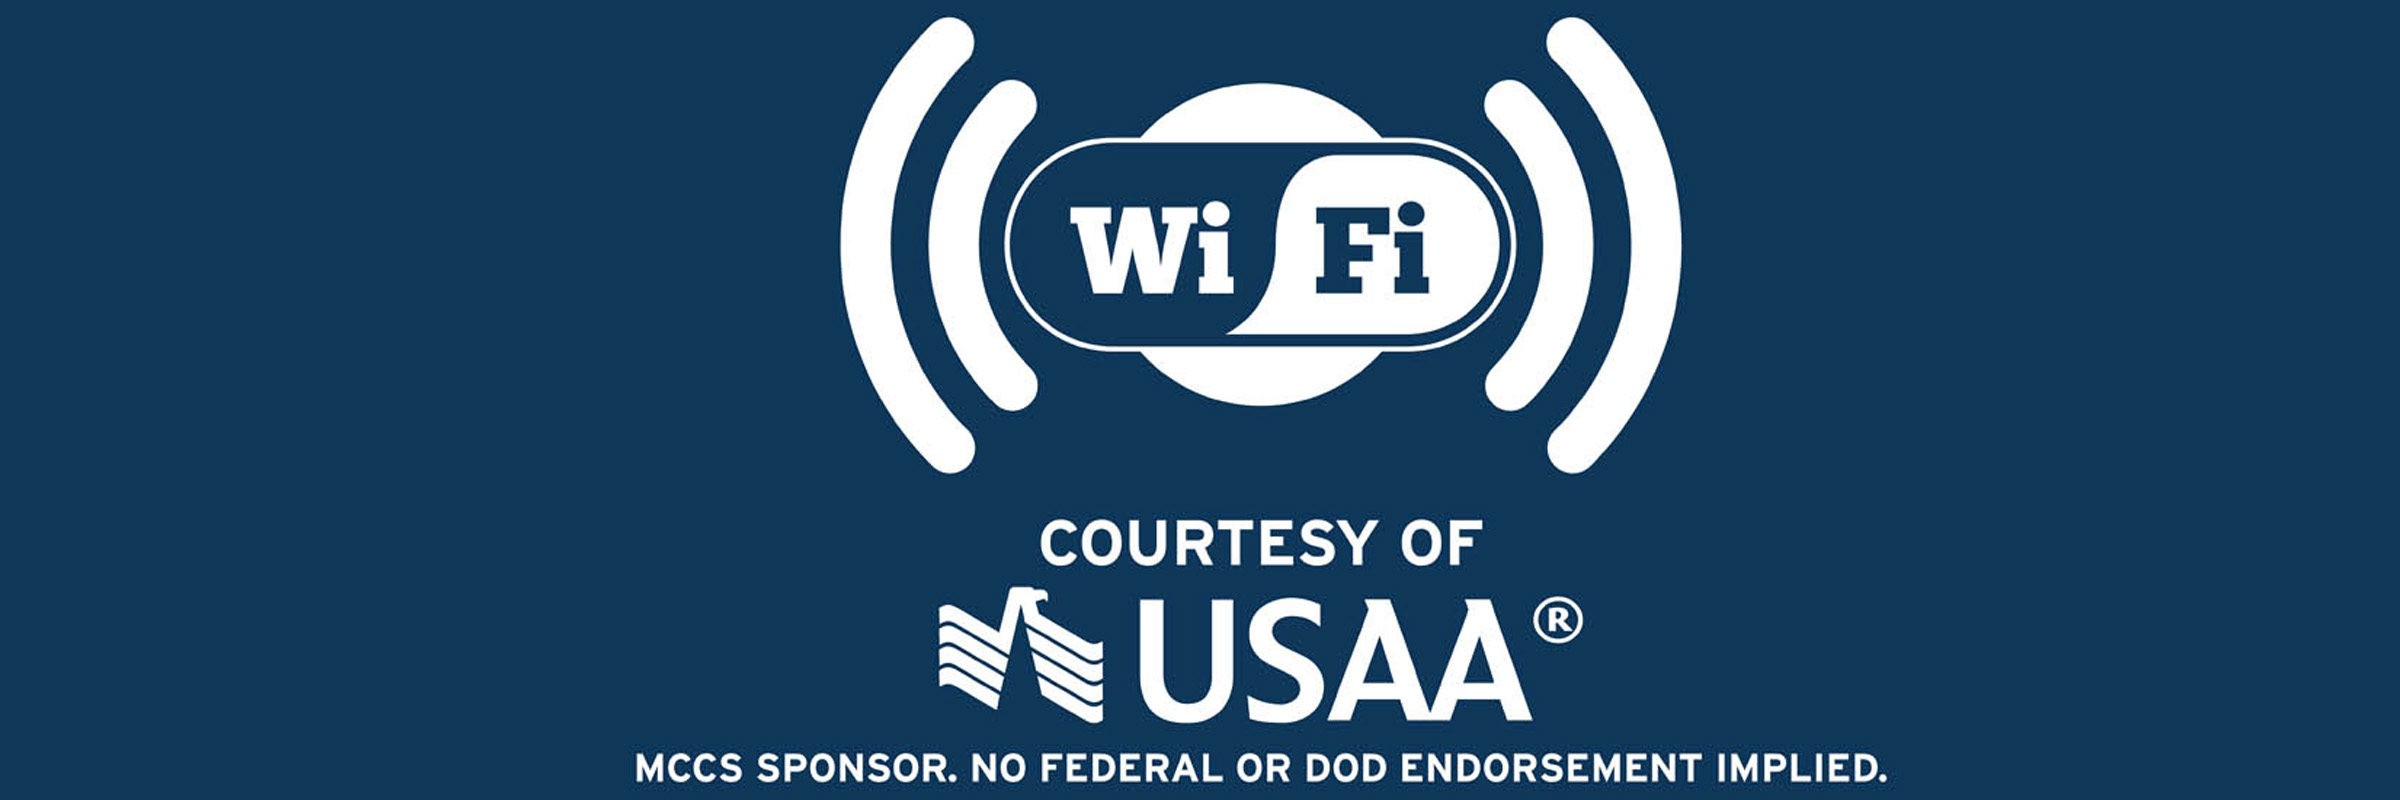 WiFi sponsored by USAA